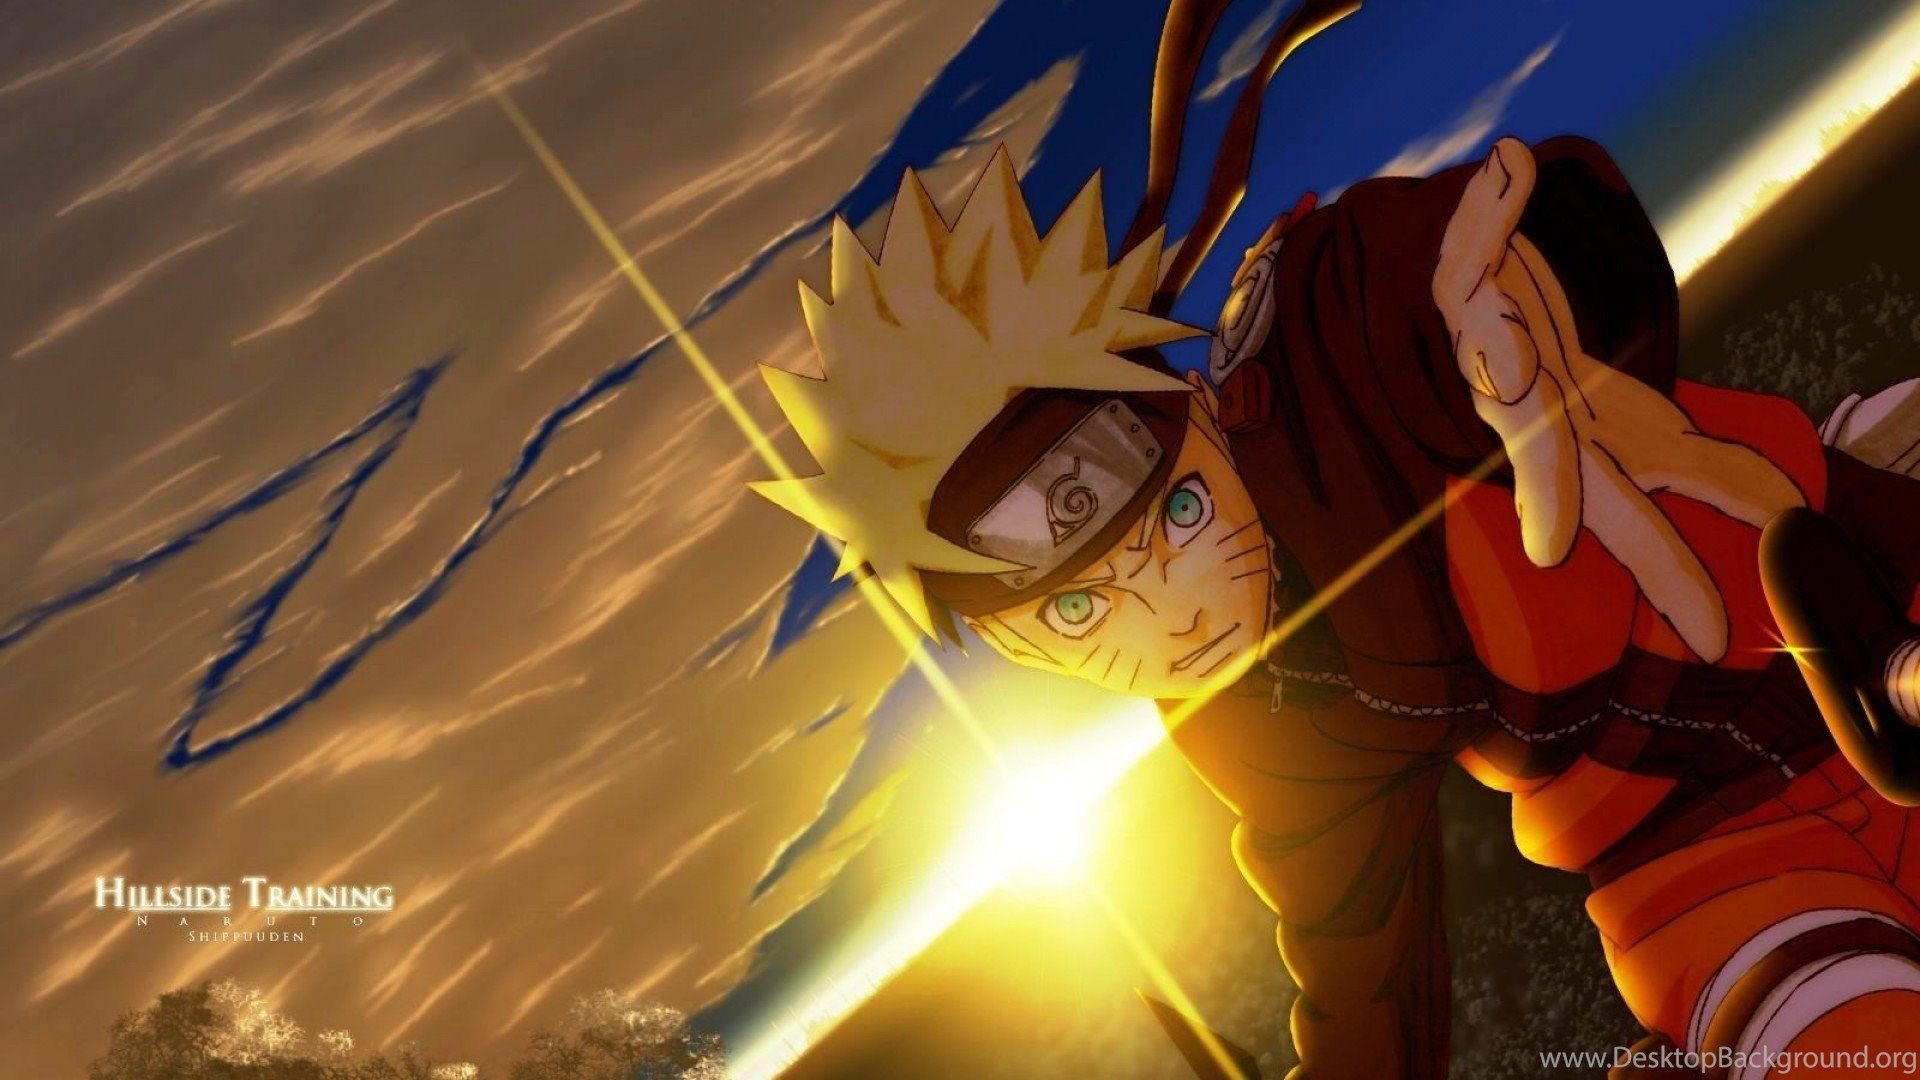 Anime Wallpaper: Naruto Shippuden Wallpaper Desktop Background HD. Desktop Background